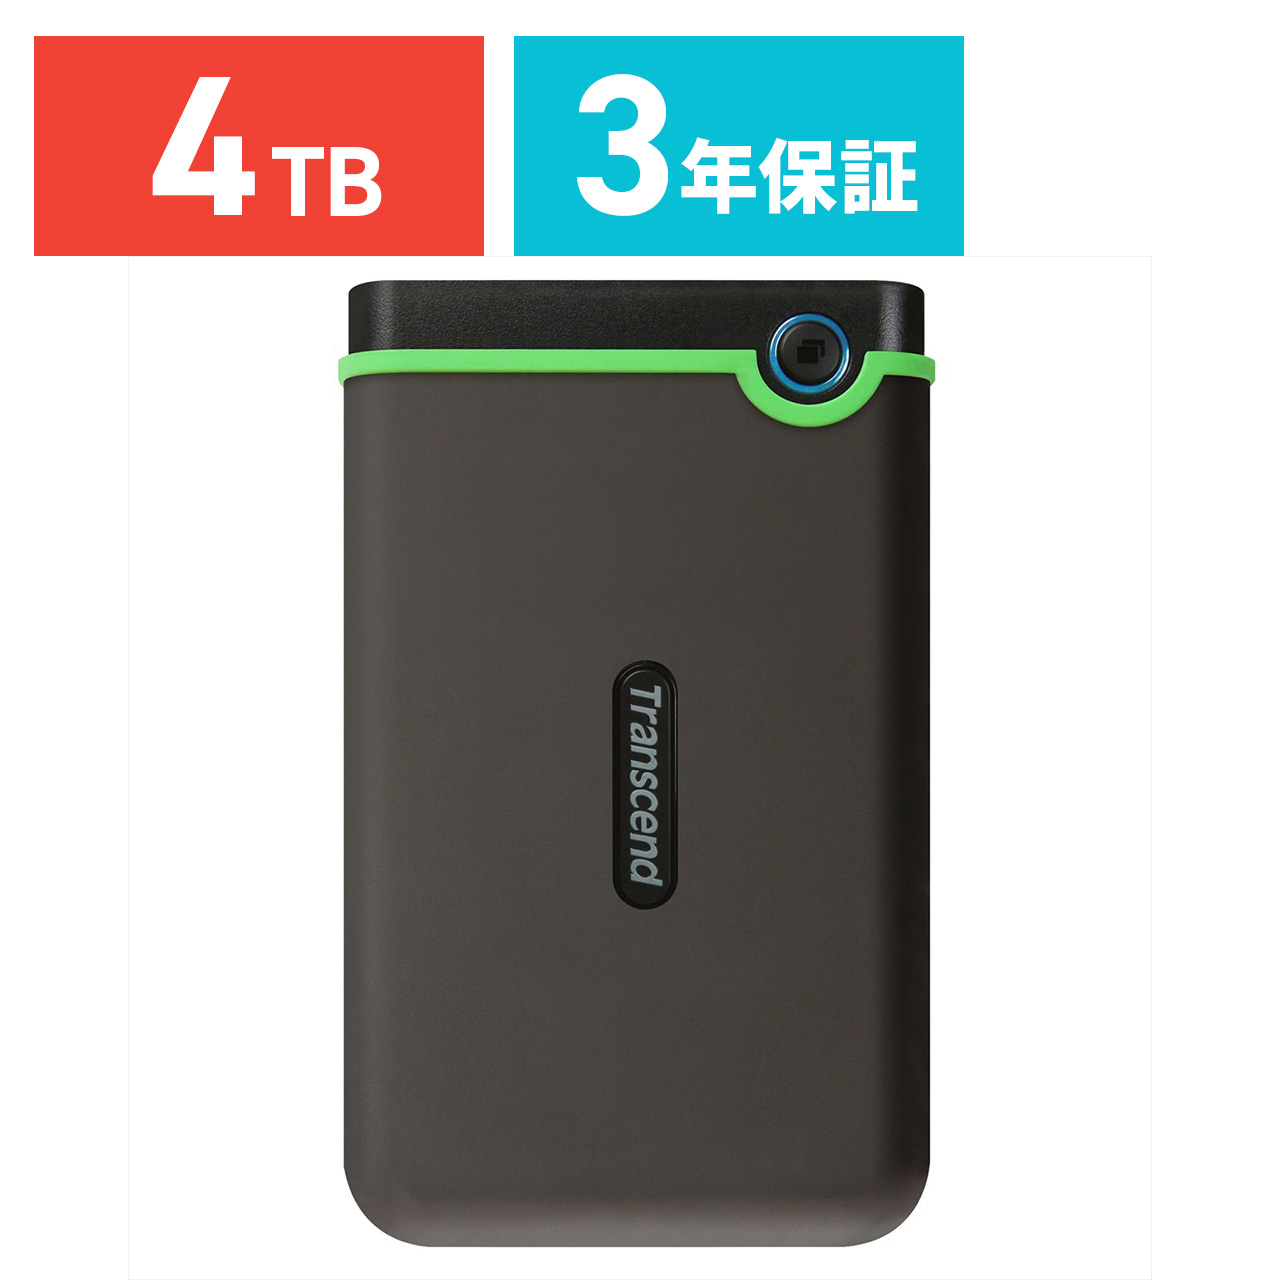 Amazon.co.jp: 短いUSBCケーブル30cm、 [3本 0.3m] Galaxy S10 S9 S8 Plus Note 9  8、パワーバンクおよびその他のタイプcデバイス用のUSB-C充電器急速充電コード… : パソコン・周辺機器